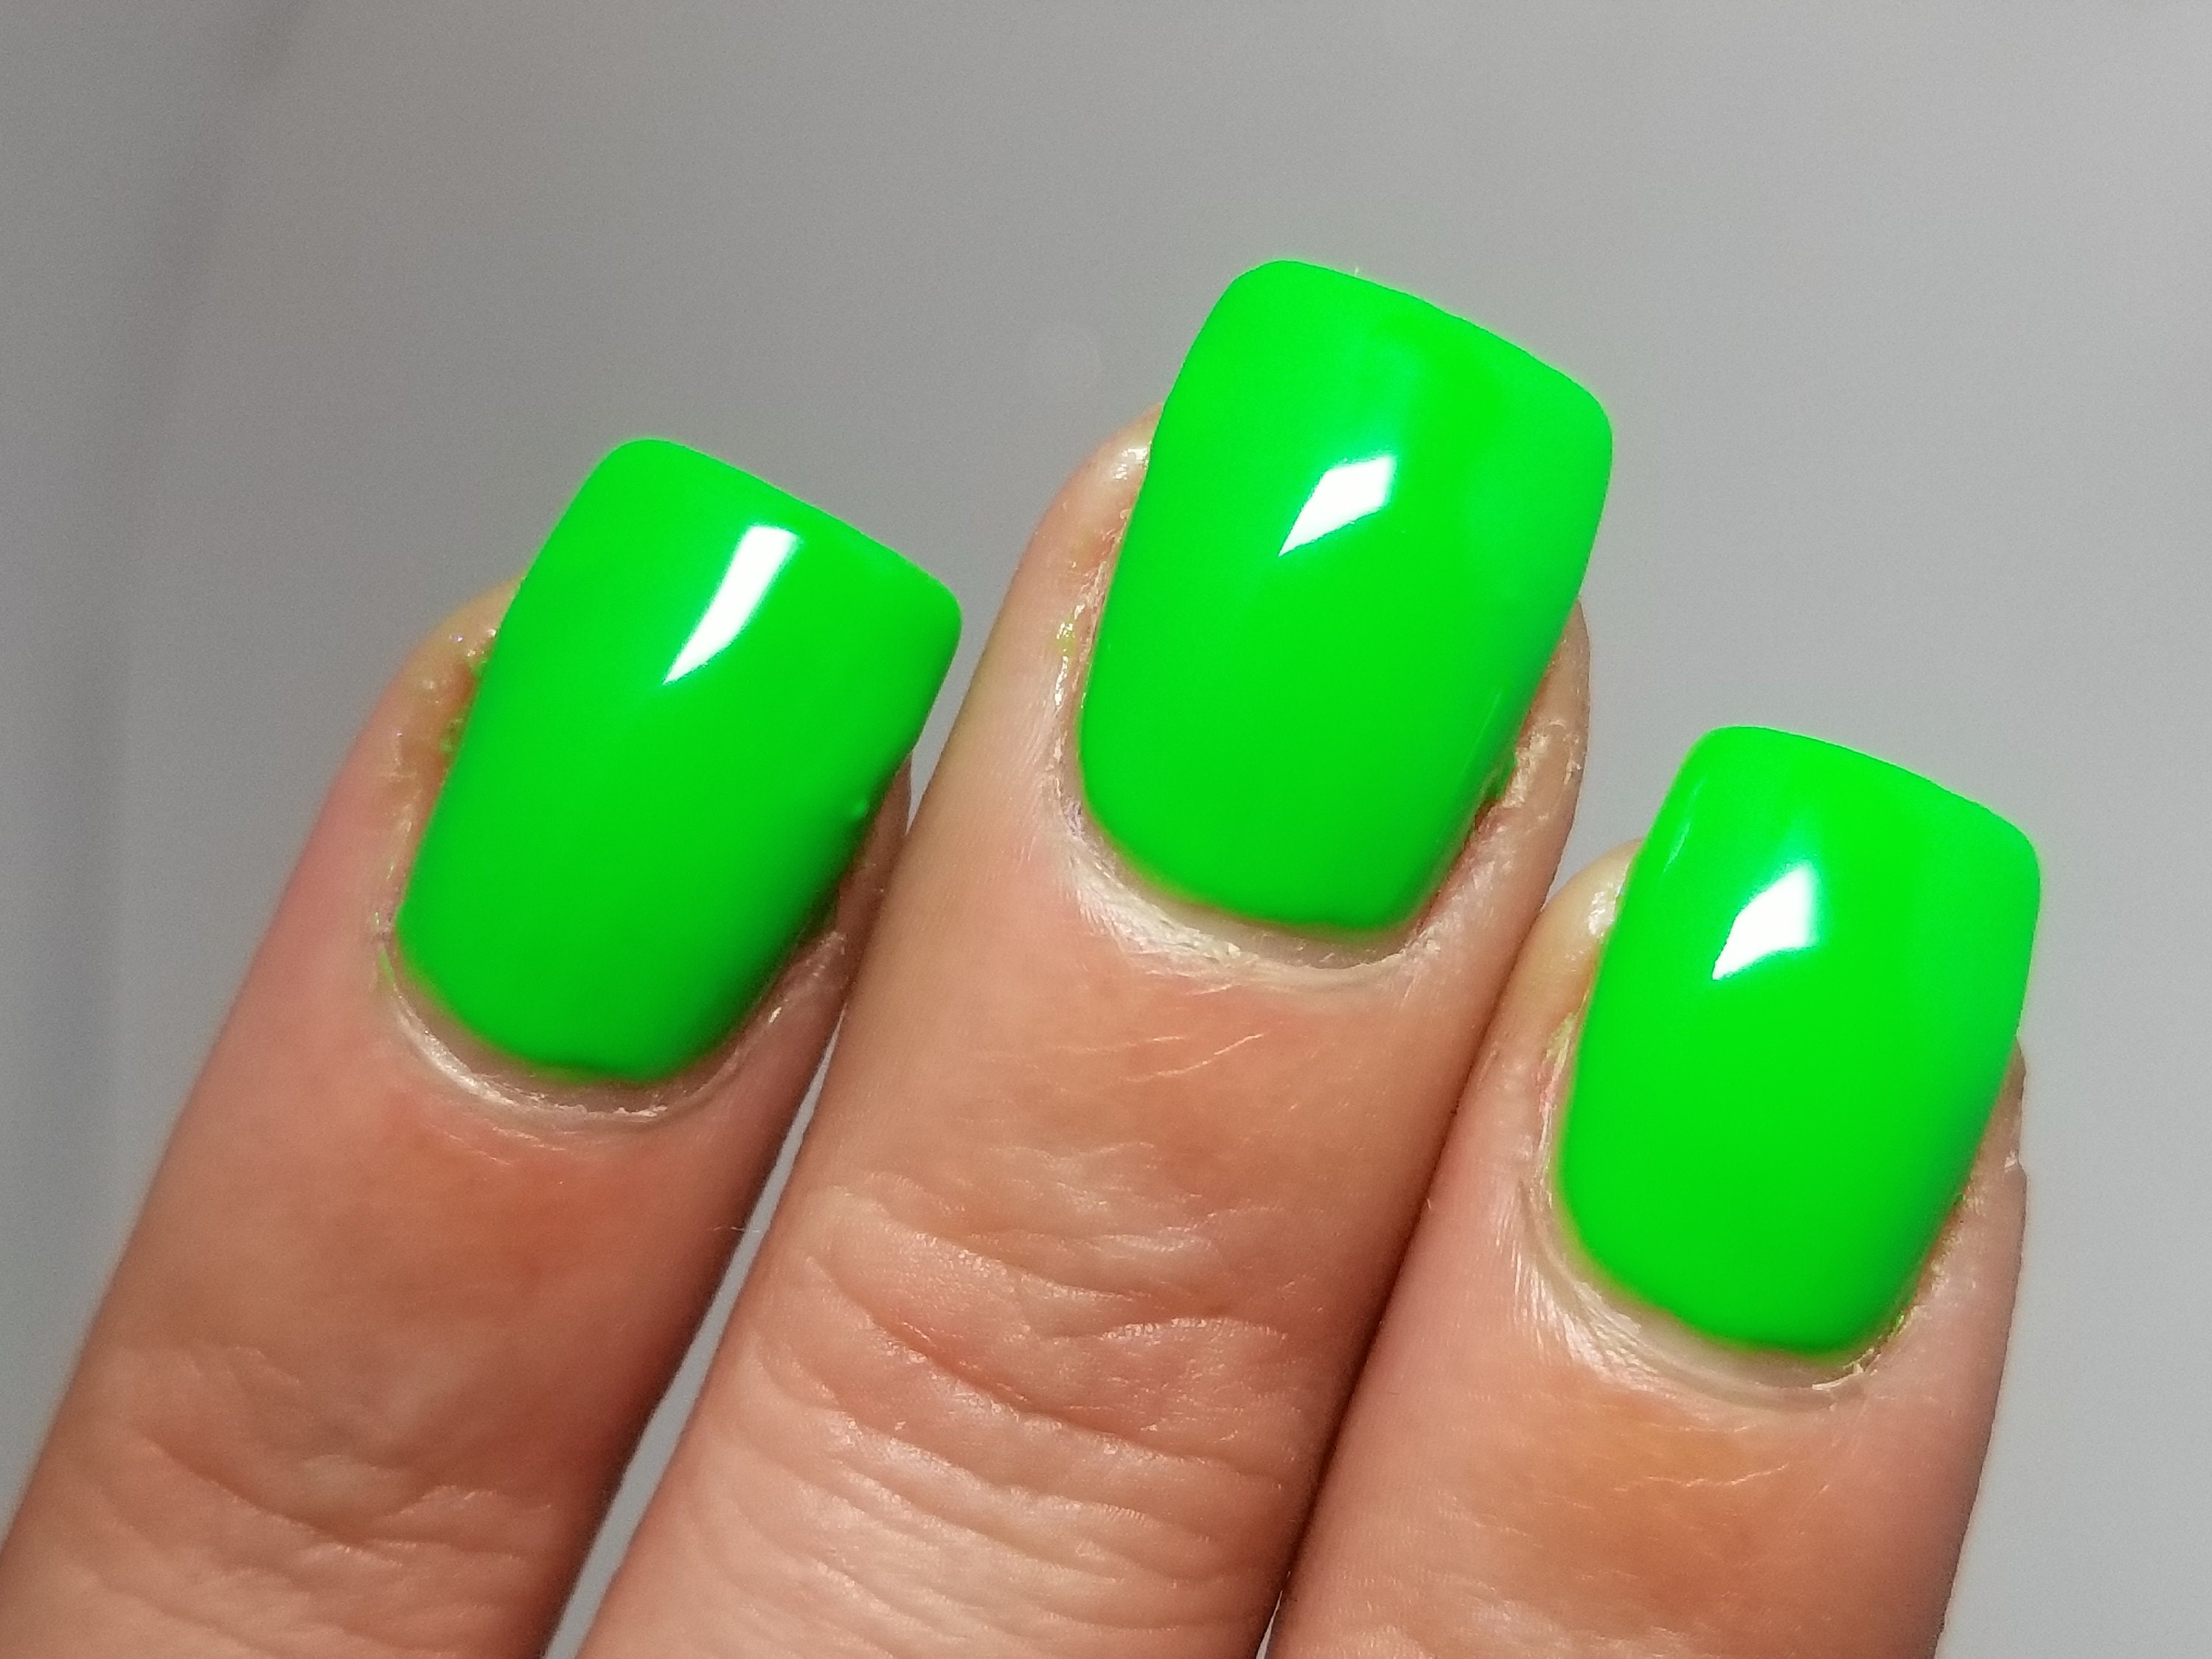 Neon Green Nail Polish Inspiration on Pinterest - wide 6